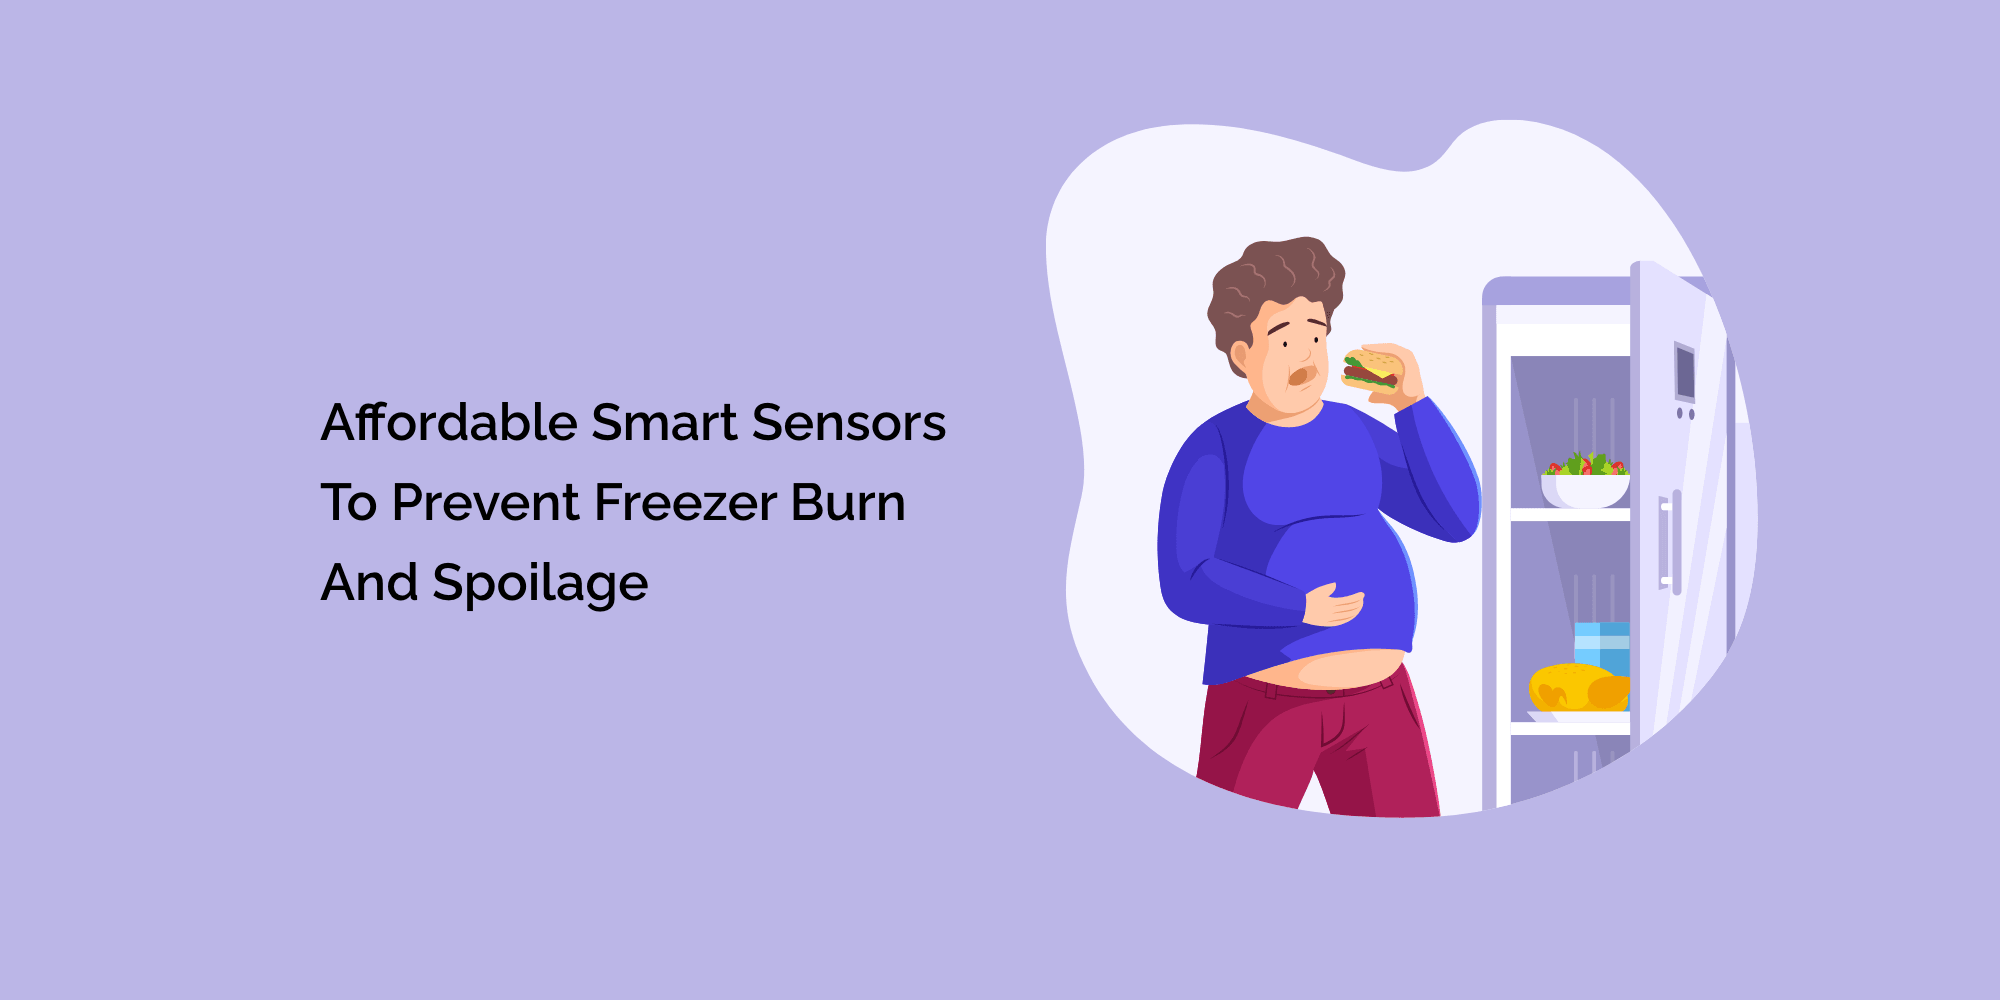 Affordable Smart Sensors To Prevent Freezer Burn and Spoilage